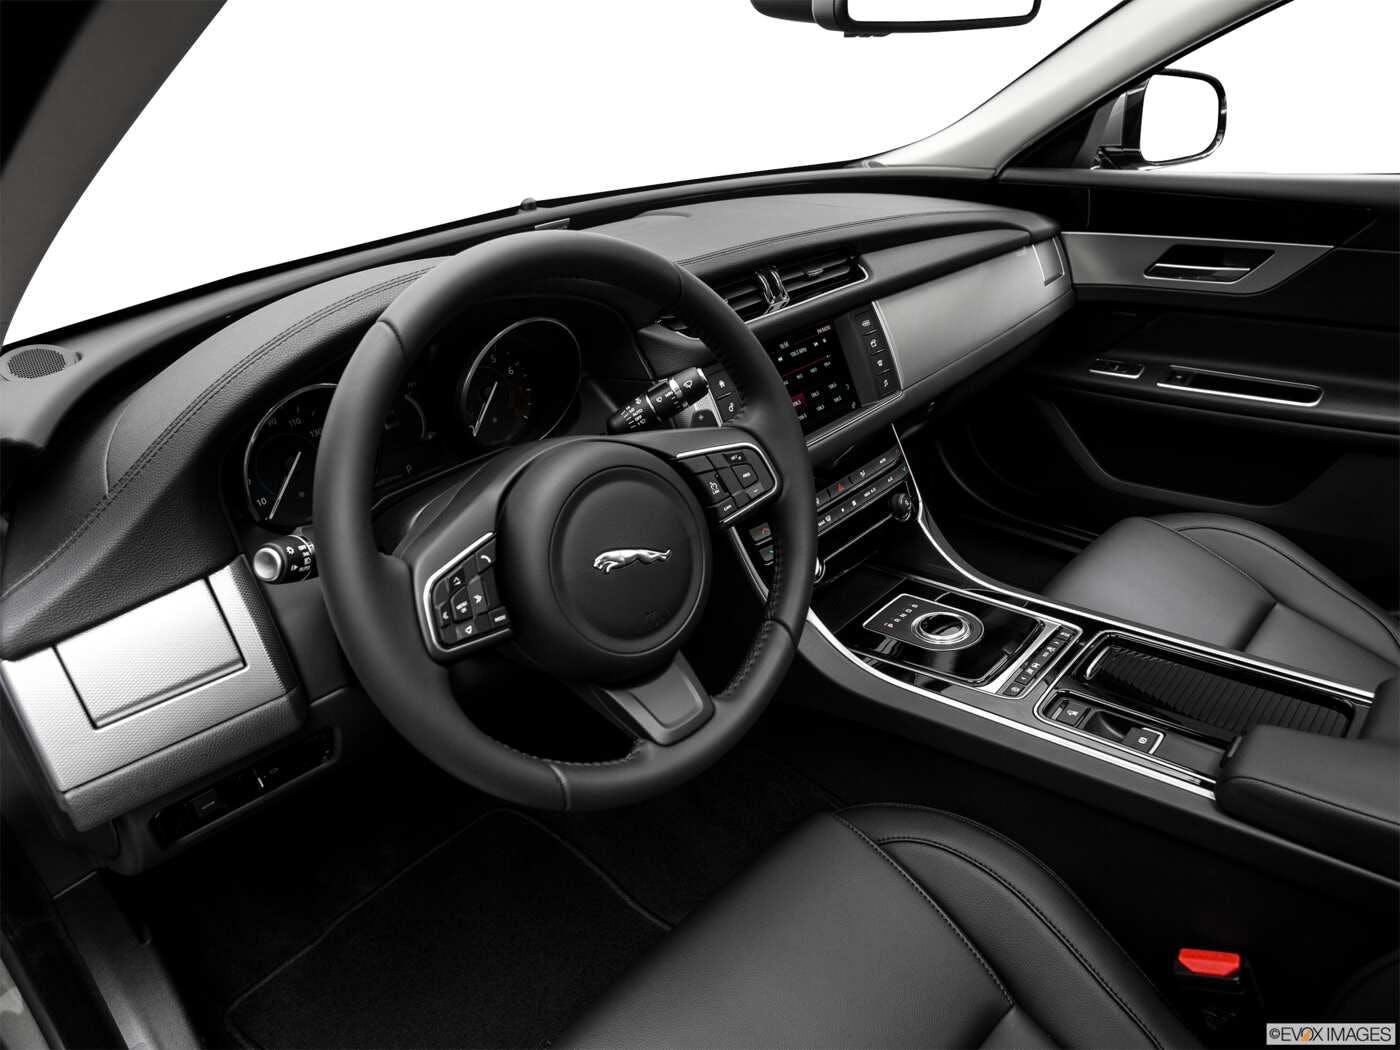 Forward motion: Test driving the new Jaguar XE